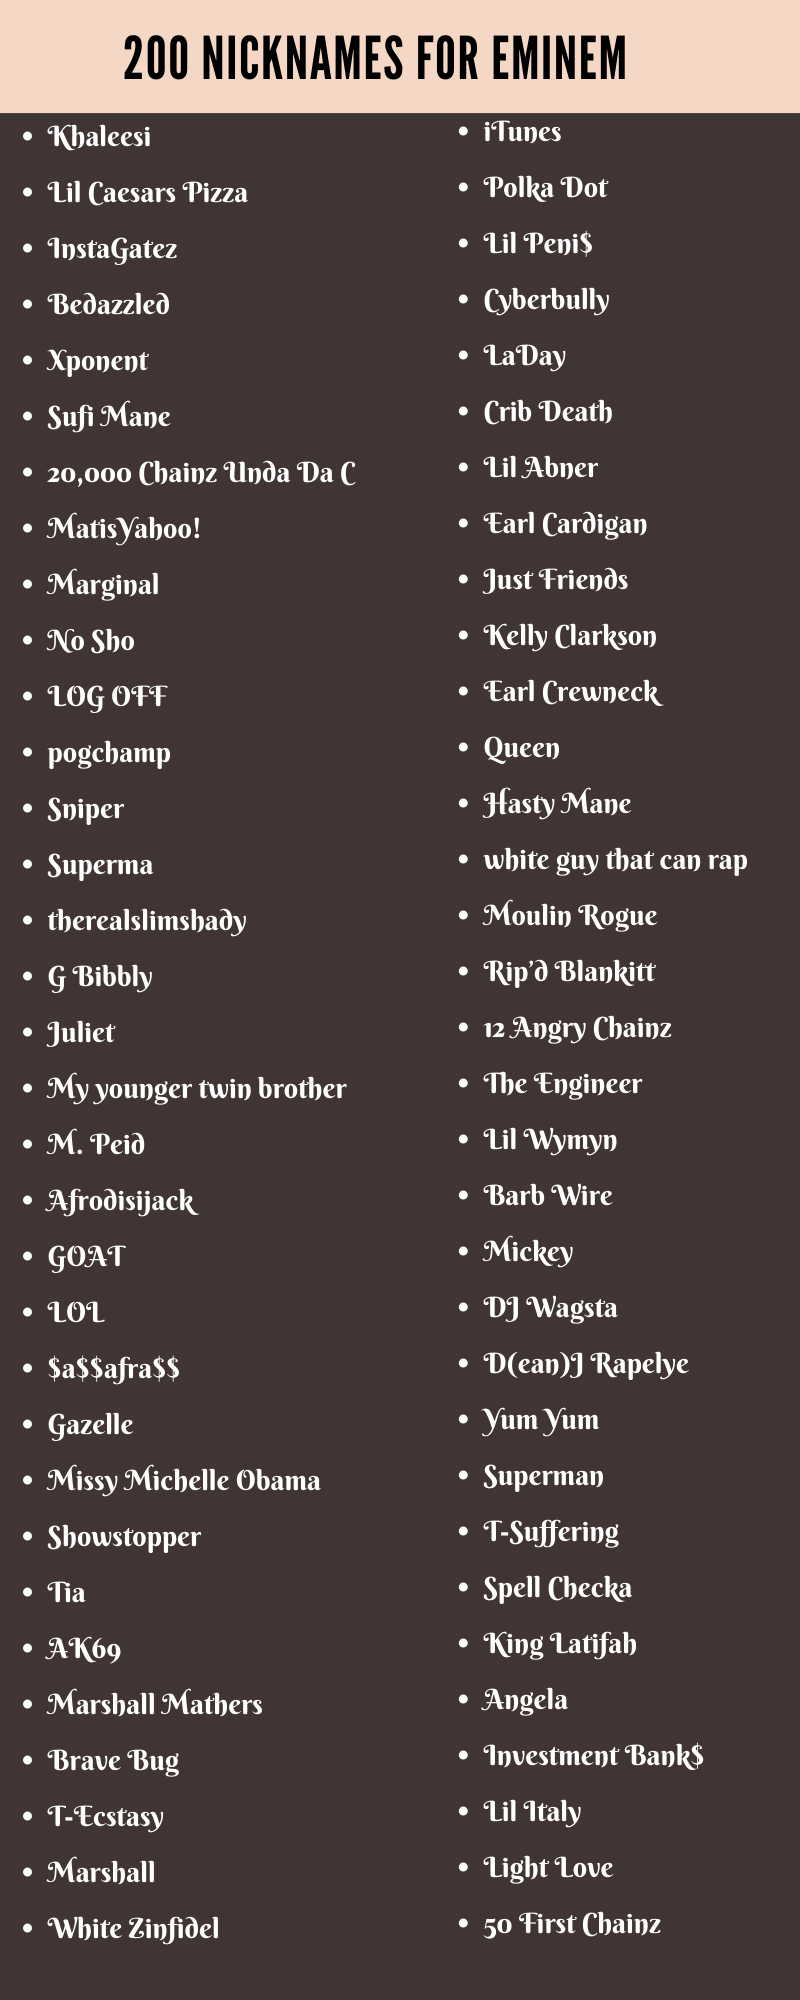 Nicknames For Eminem: 200 Adorable and Cool Names